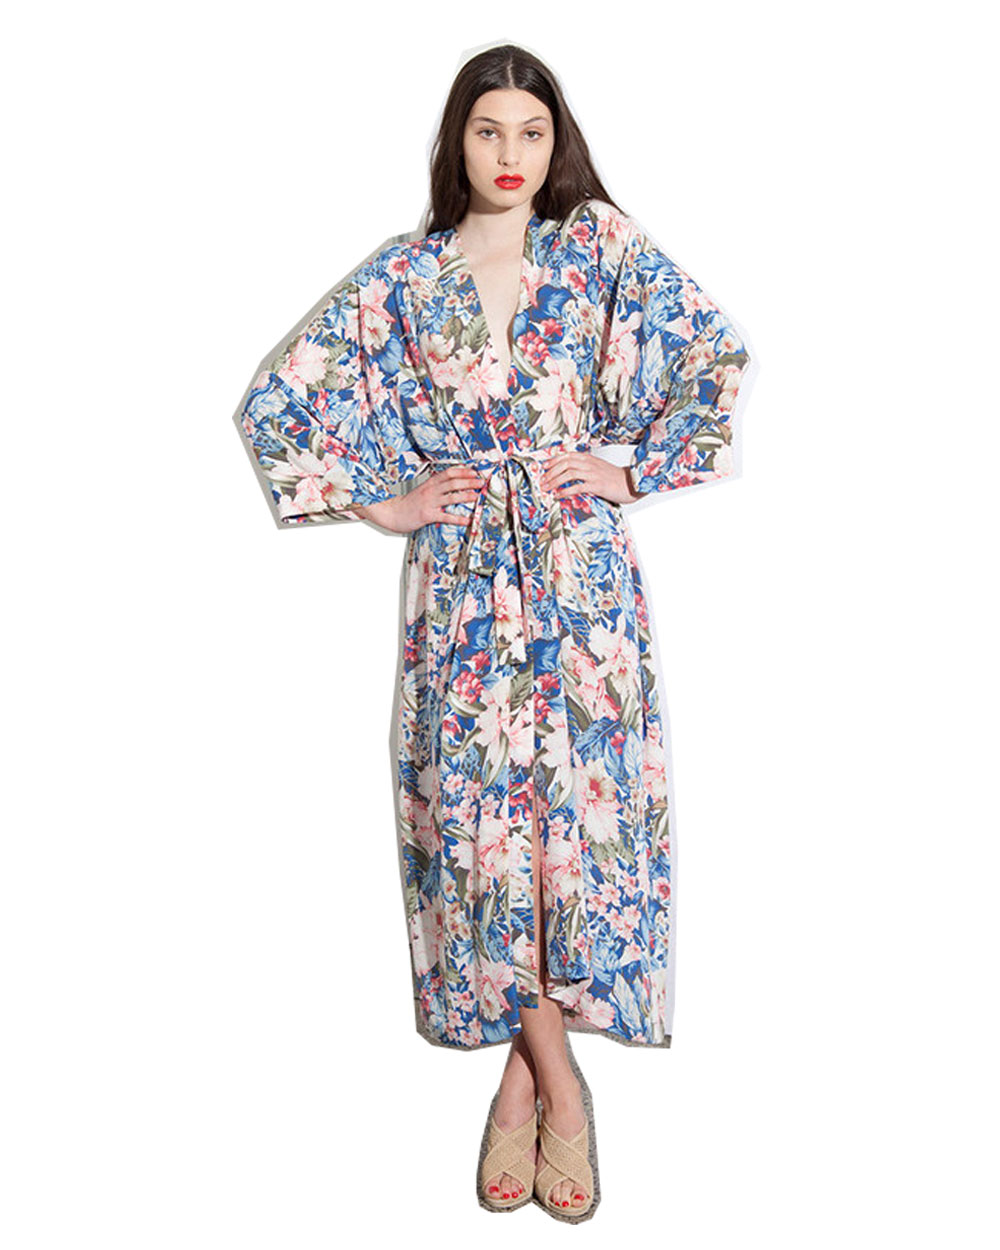 Miss Crabb robe - $550